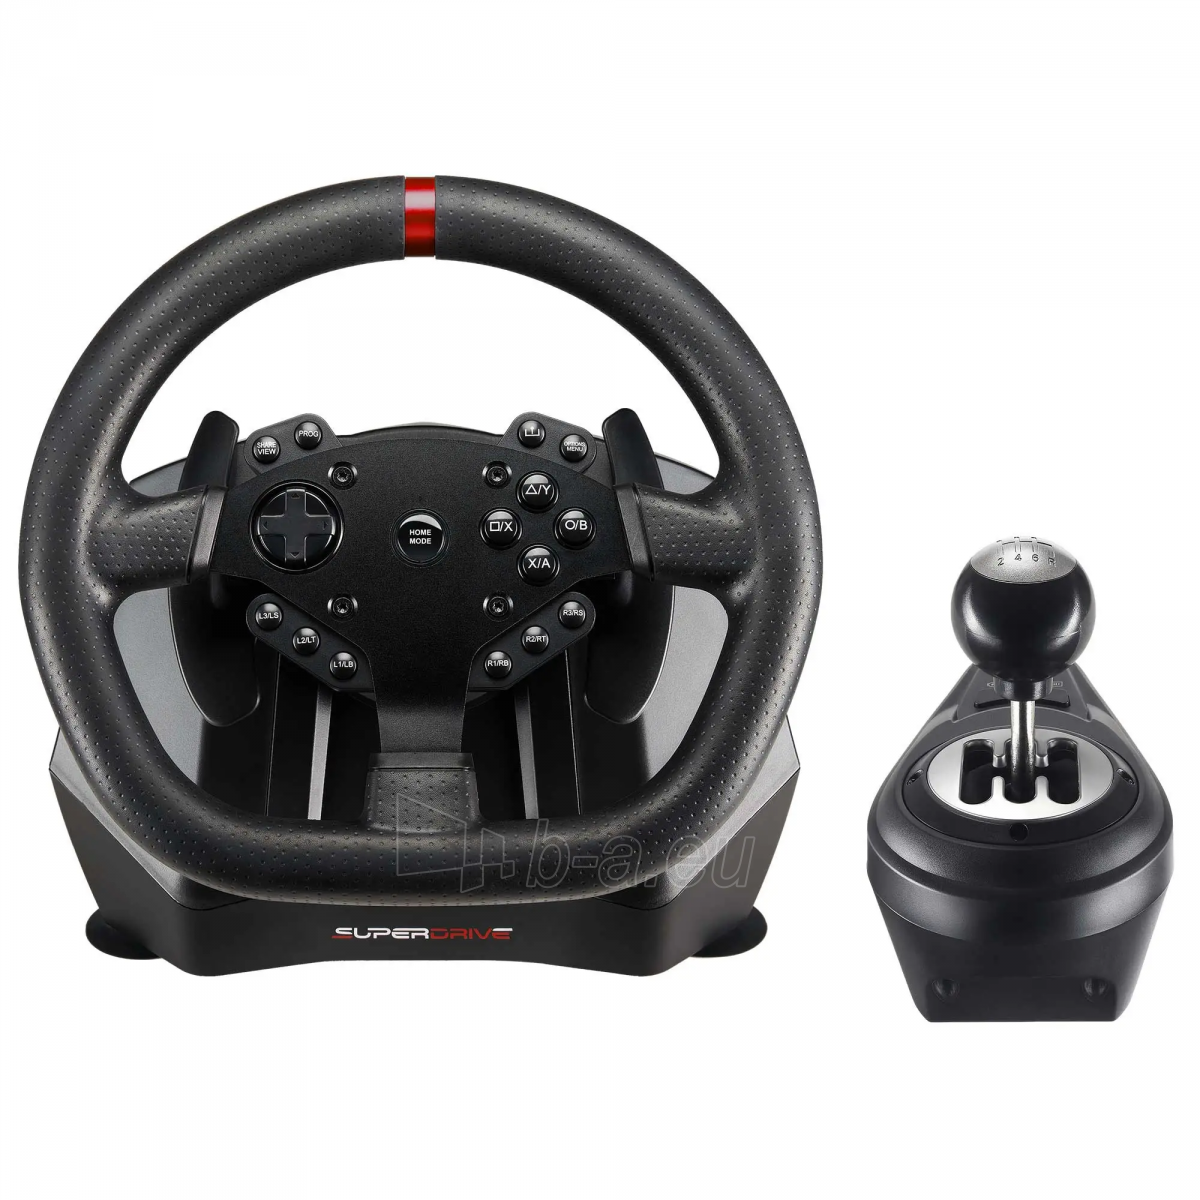 Vairalazdė Subsonic Superdrive GS 950-X Racing Wheel (PC/PS4/XONE/XSX) paveikslėlis 4 iš 10